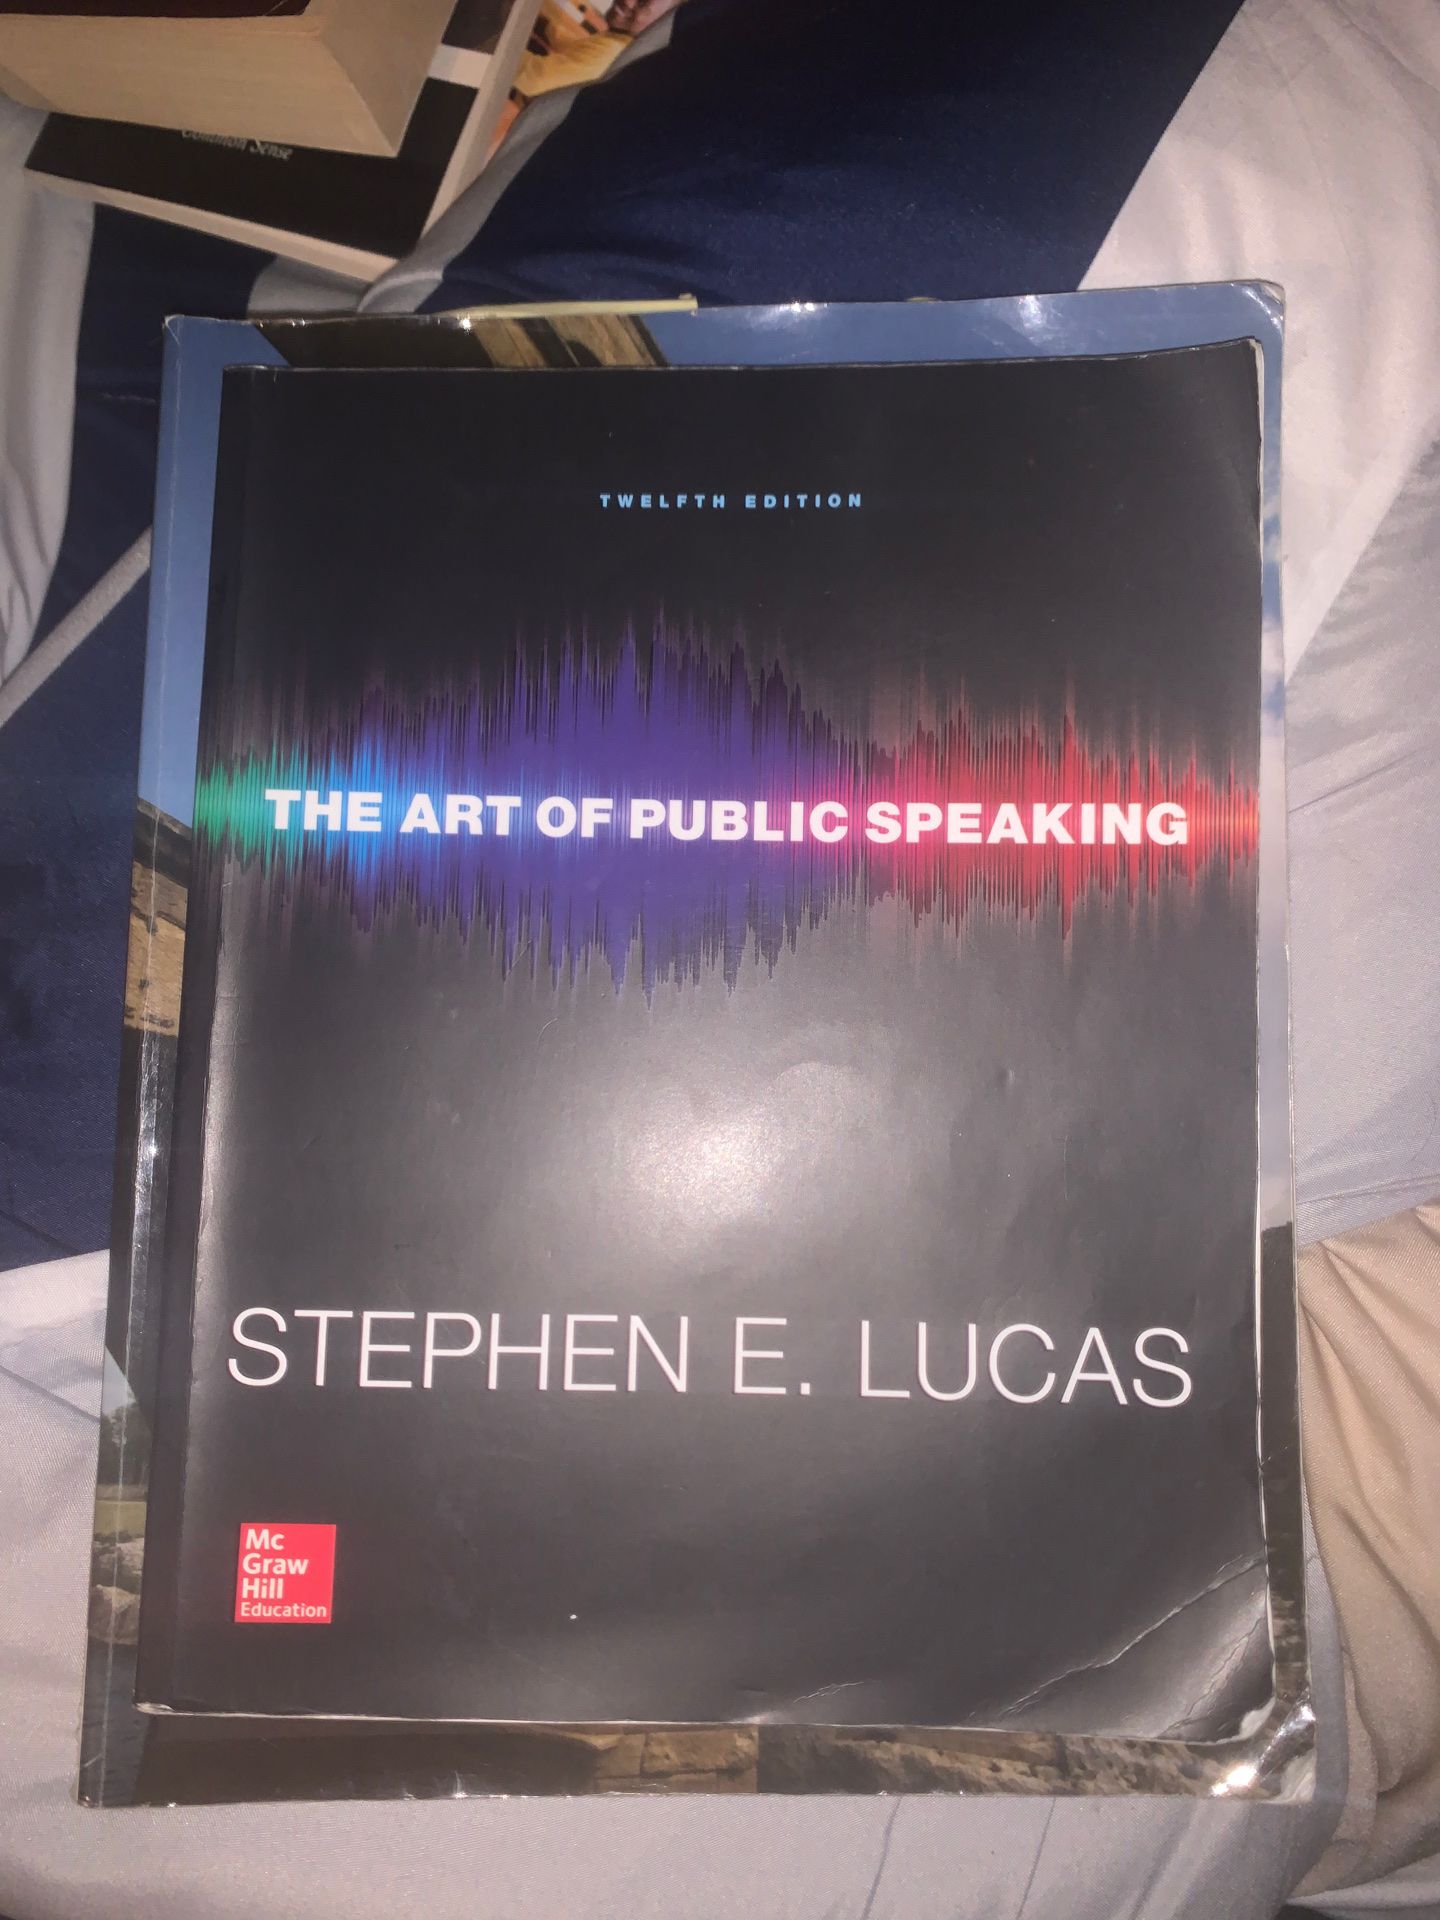 The art of public speaking by Stephen E. Lucas